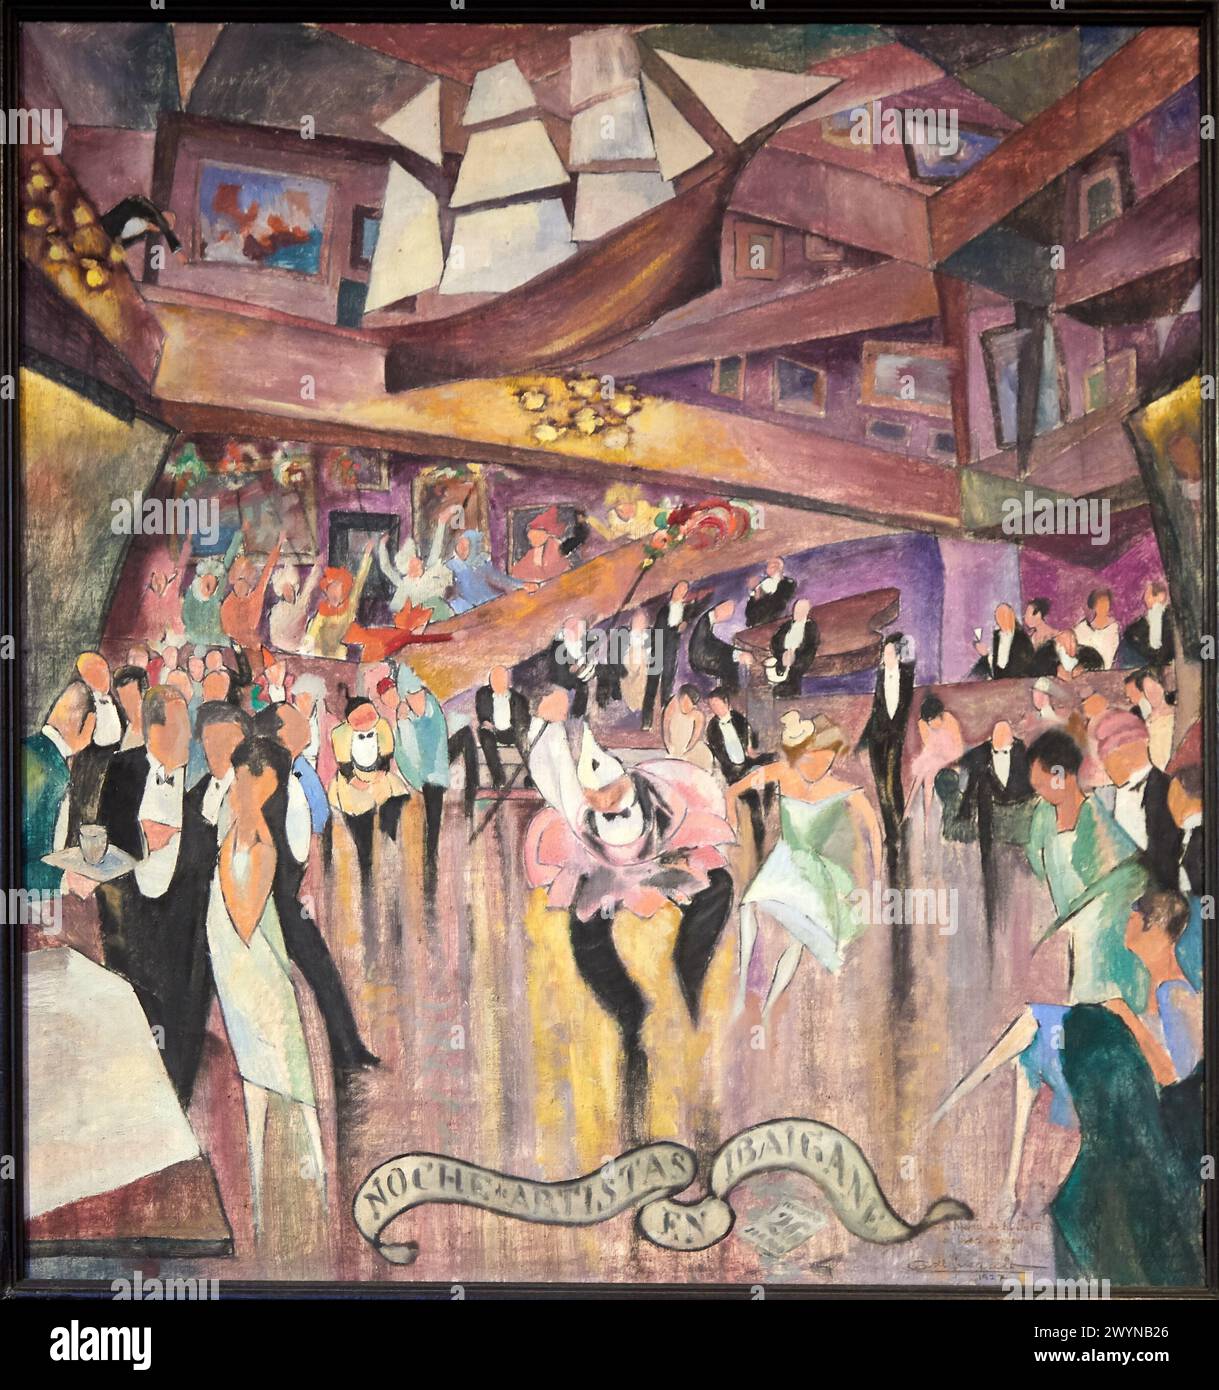 Notte degli artisti, Ibaigane, 1927, Antonio de Guezala (1889-1956), Museo de Bellas Artes, Bilbao, Bizkaia, Paesi Baschi, Spagna. Foto Stock